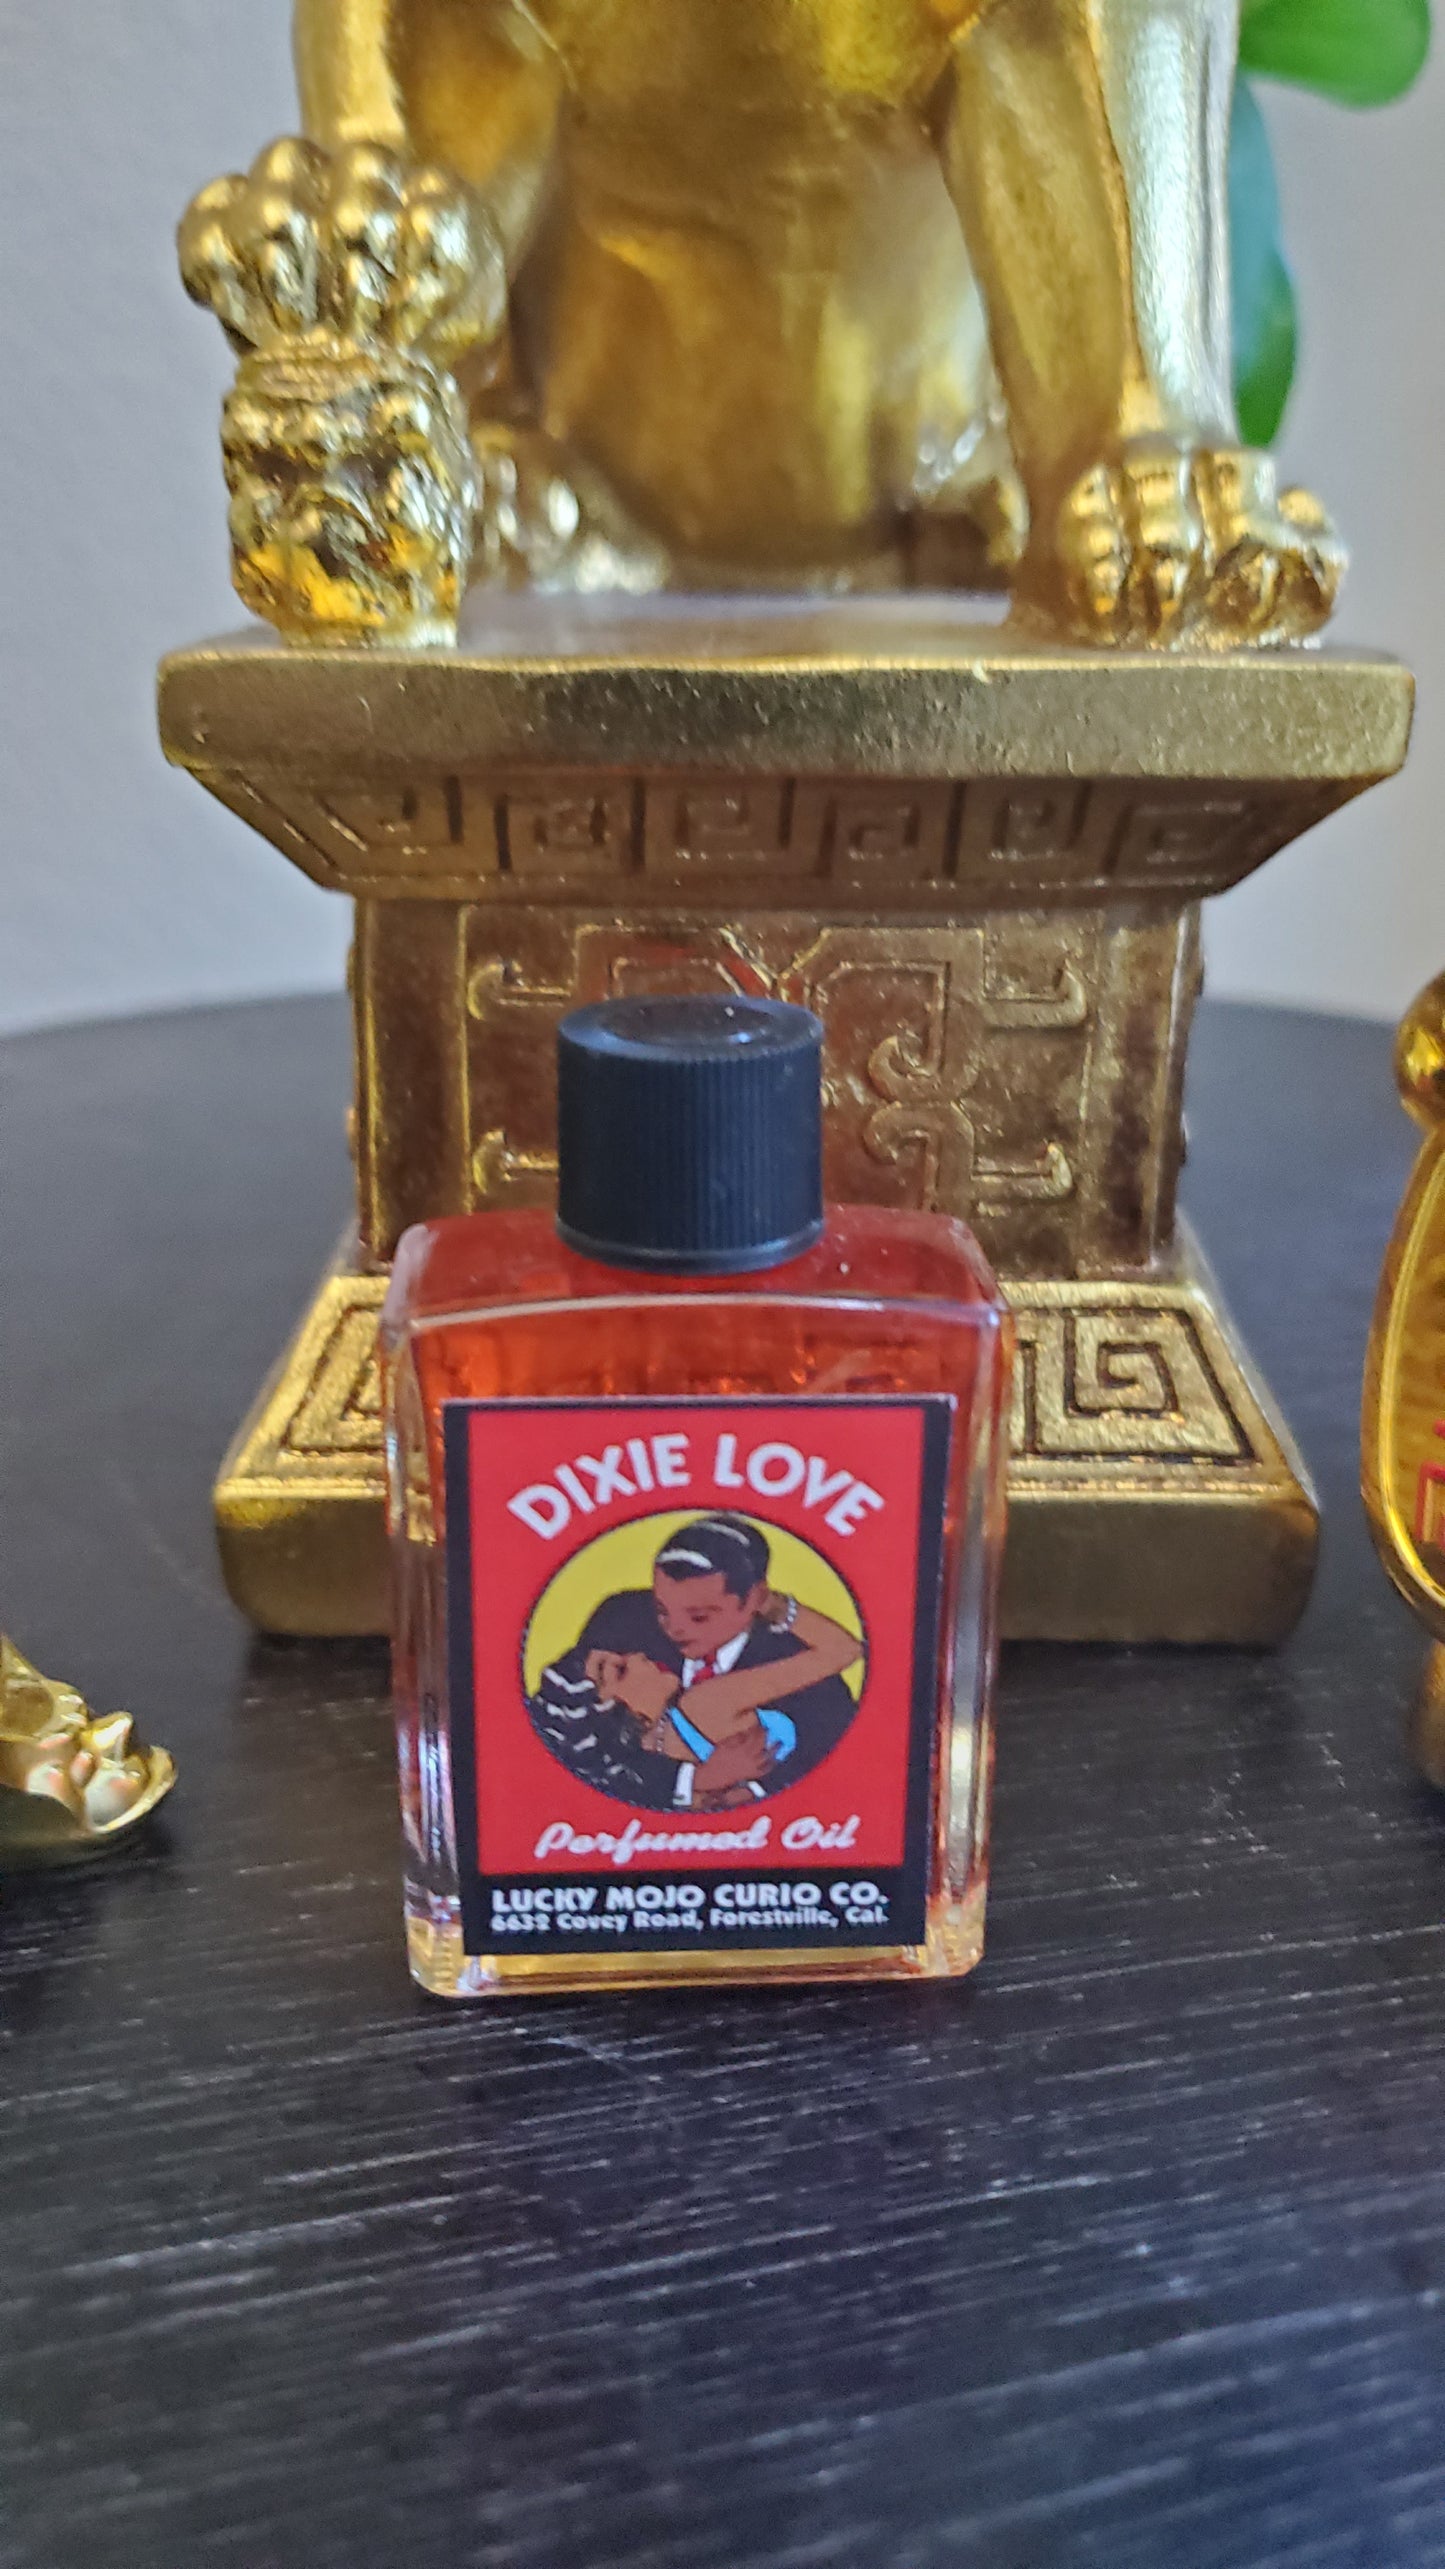 LuckyMojoCurioCo "Dixie Love" Anointing / Conjure Oil #Great Deal #LuckyMojoCurioCo #LuckyMojo #EffectiveOils #LoveMagick